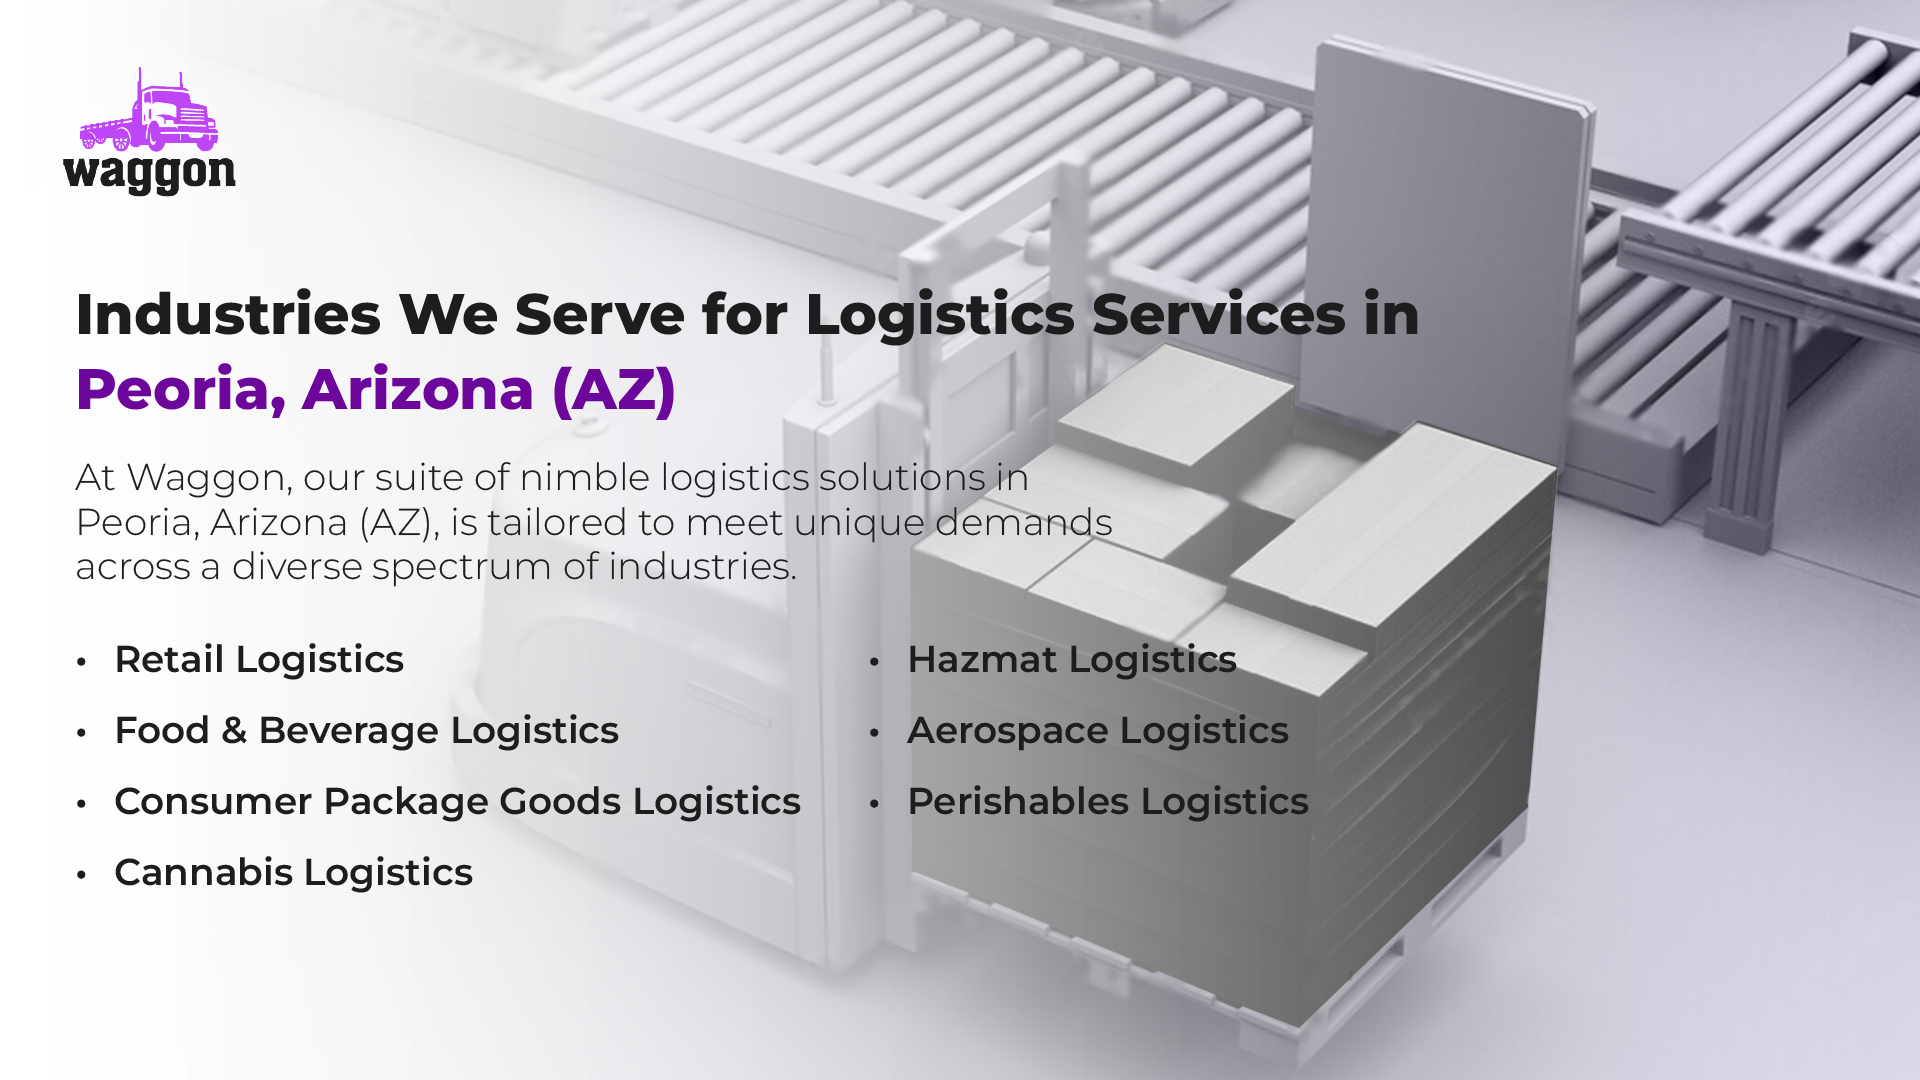 Industries We Serve for Logistics Services in Peoria, Arizona (AZ)